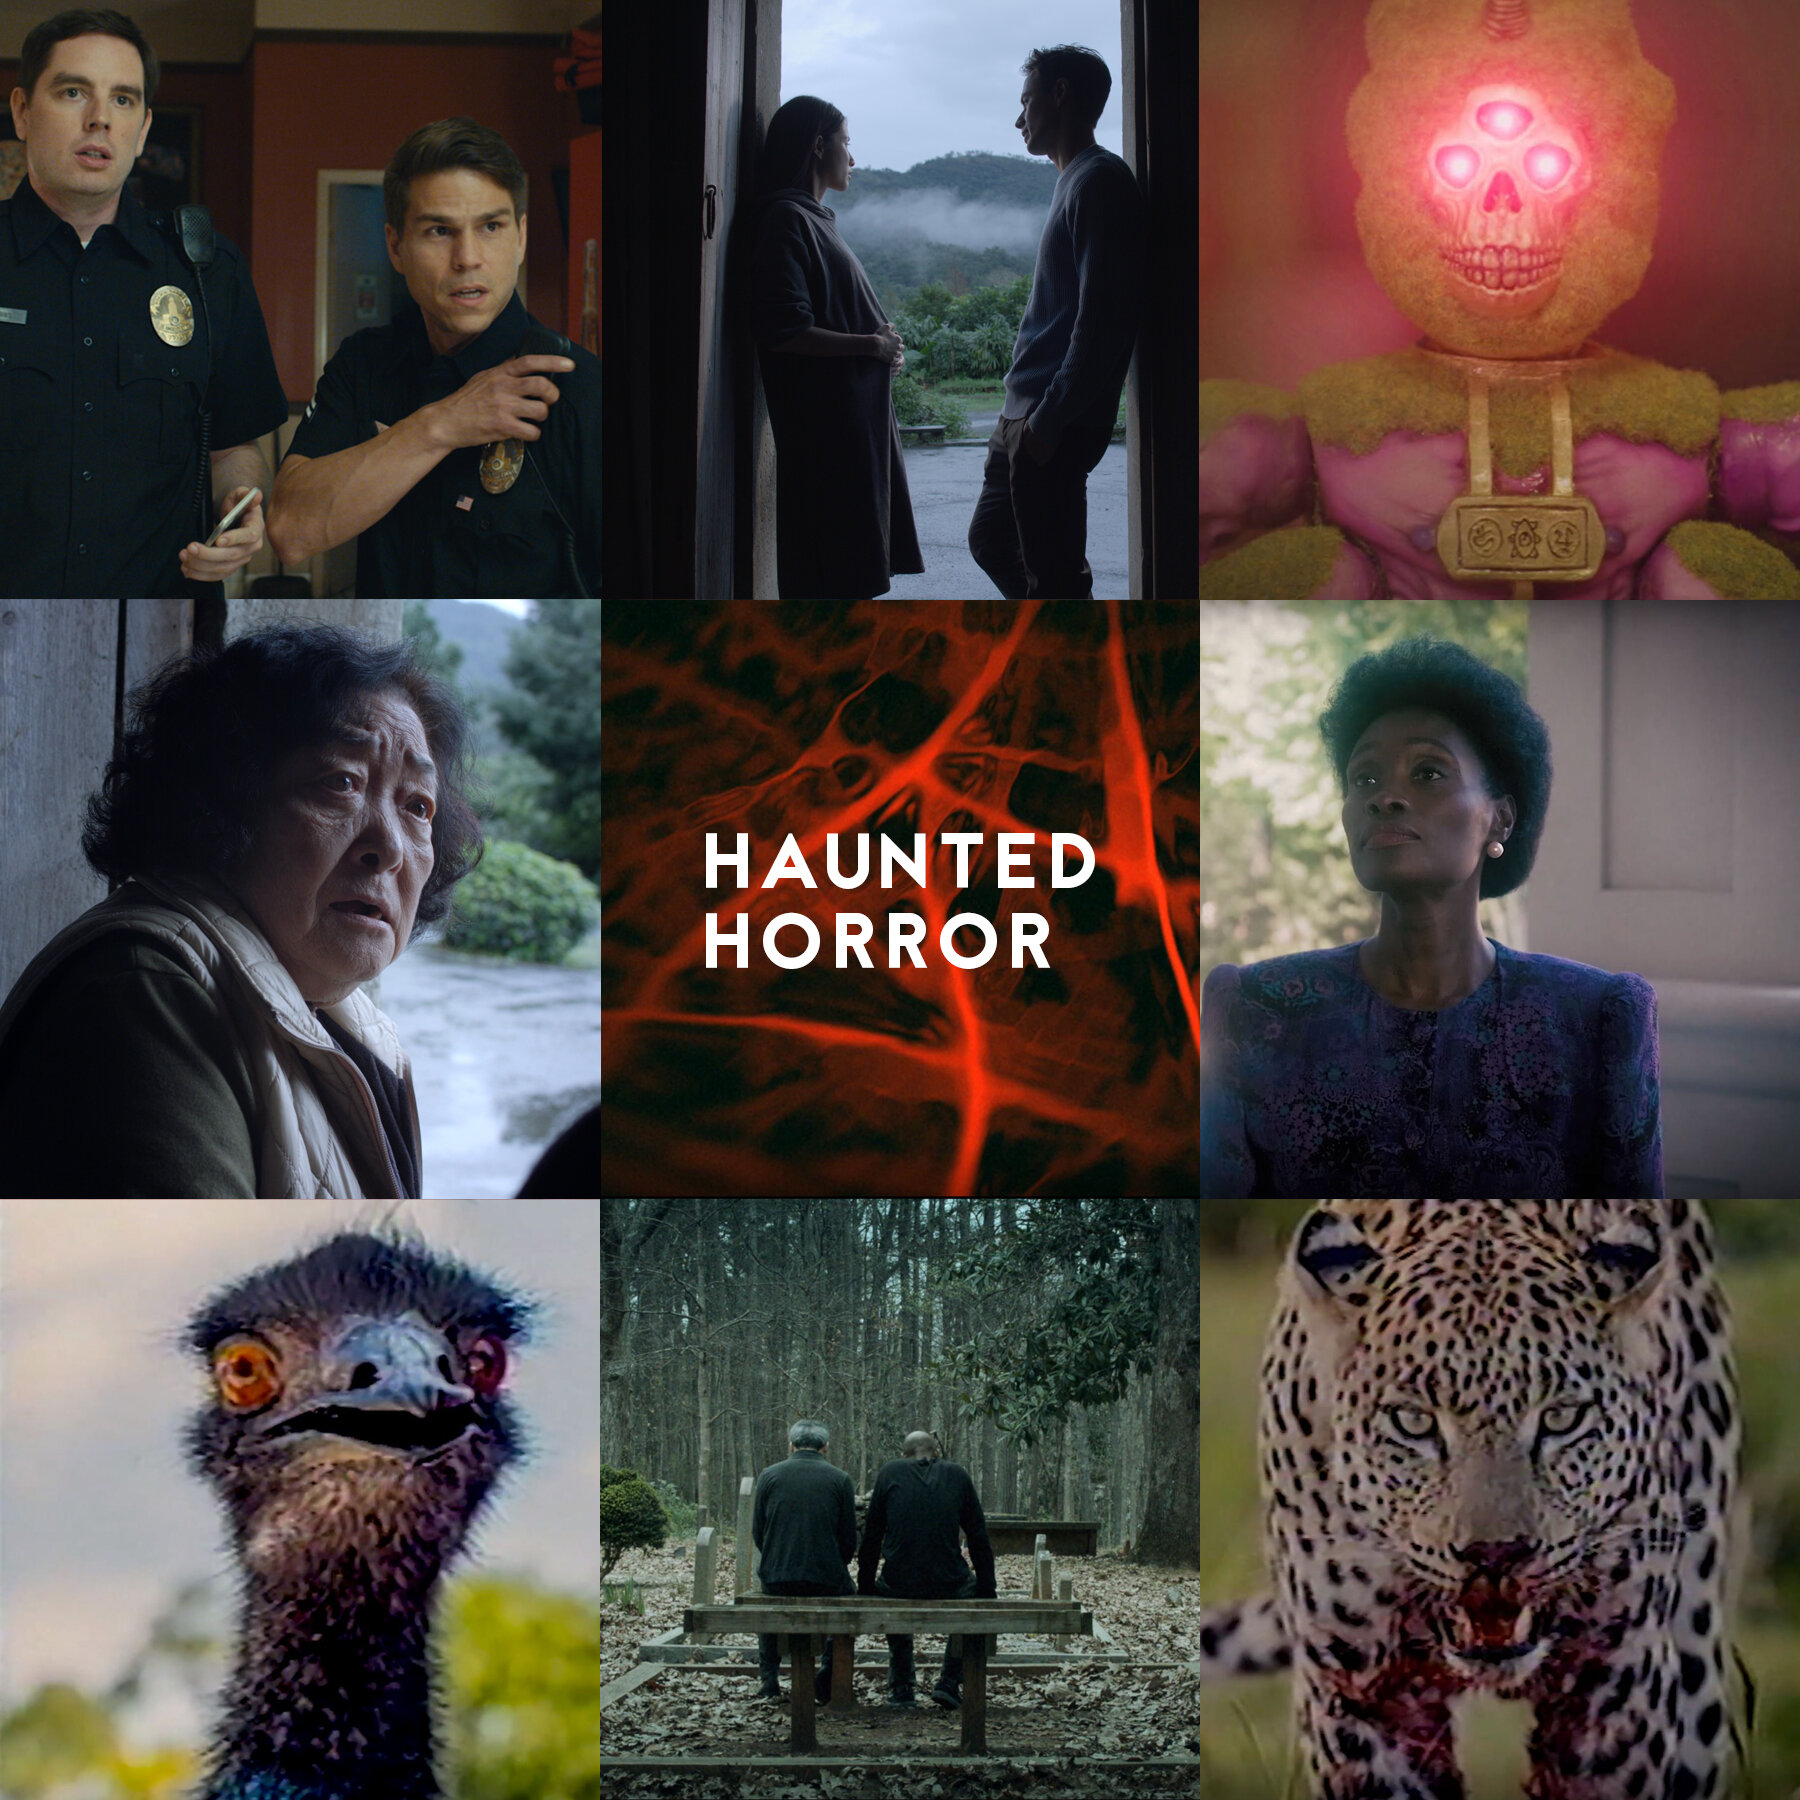 Haunted Horror Halloween Shorts - October 27, 2019